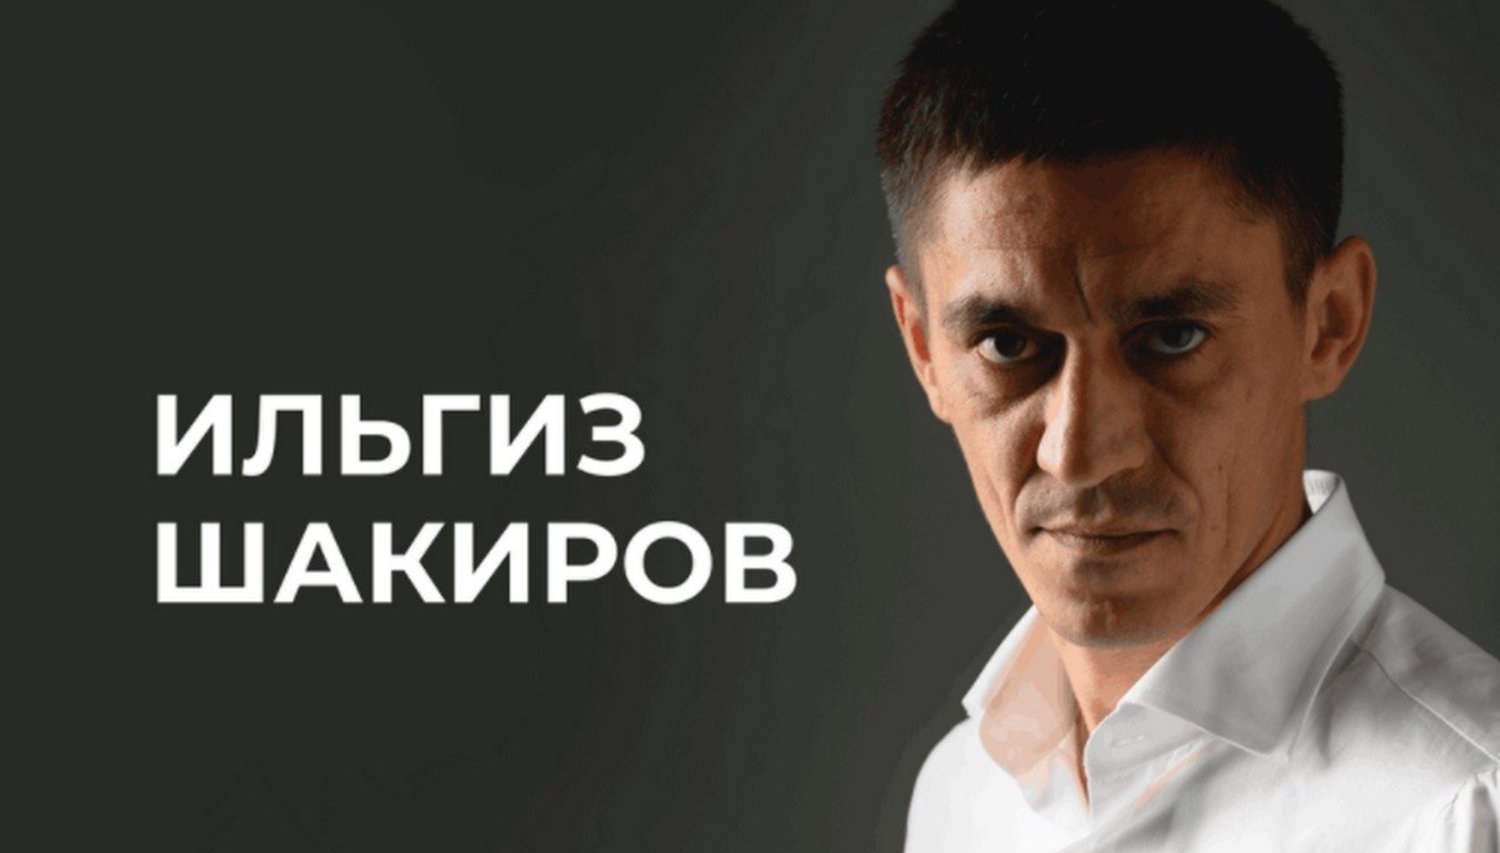 Top Finiko Crypto Pyramid executive arrested in Russian Tatarstan